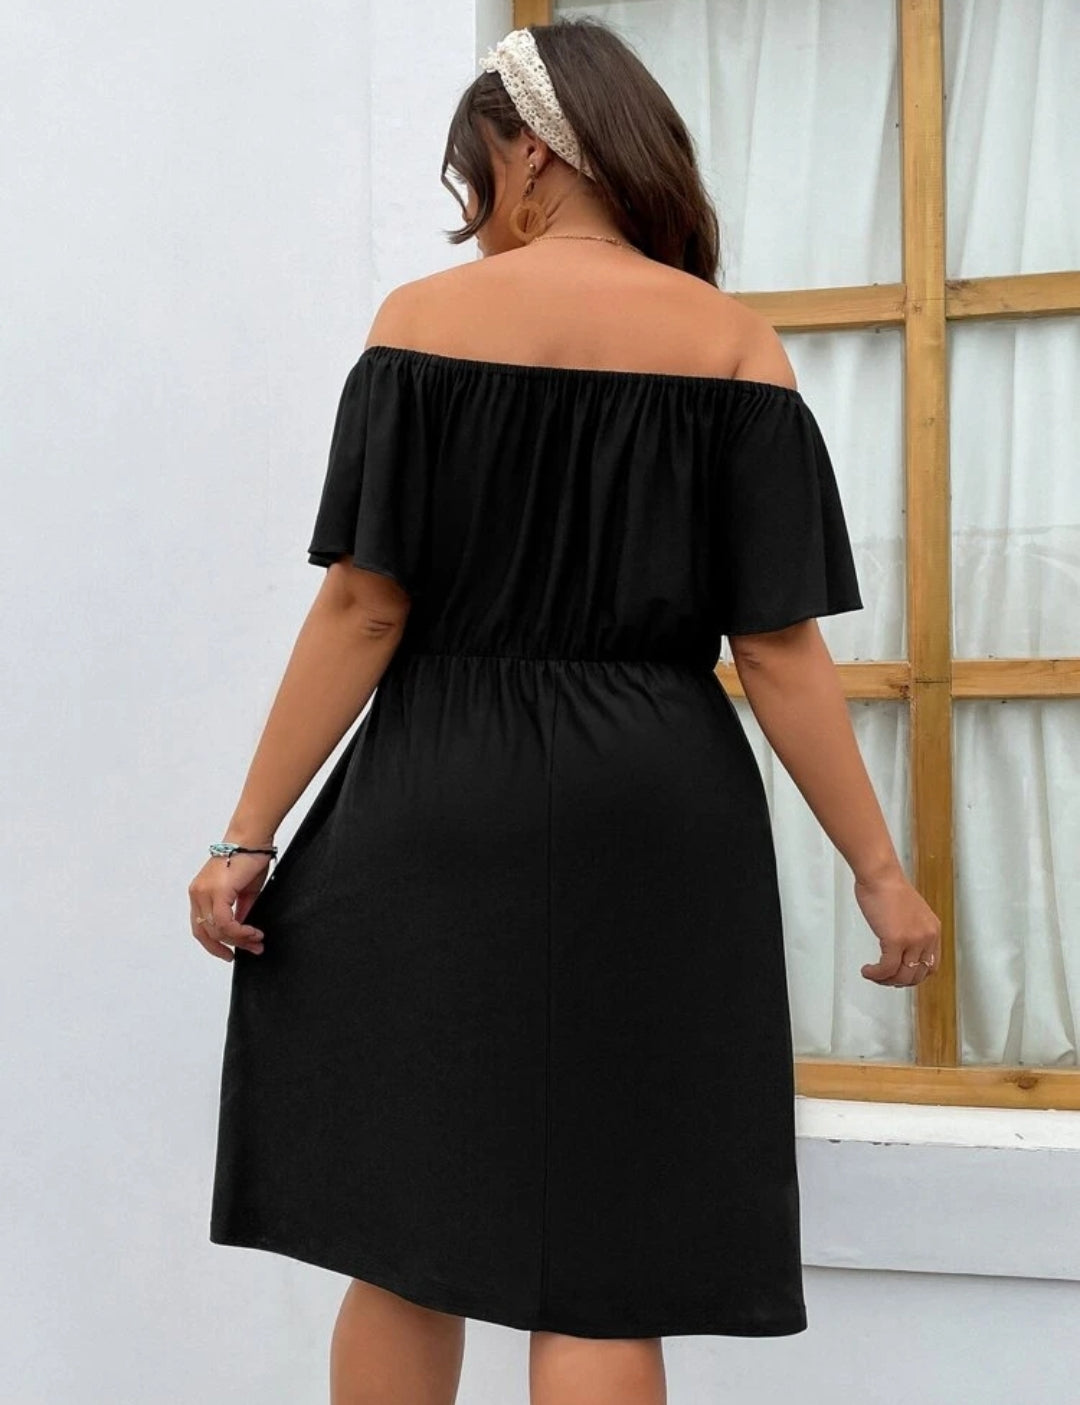 Oversized off-the-shoulder dress - Black - Ladies | H&M IN